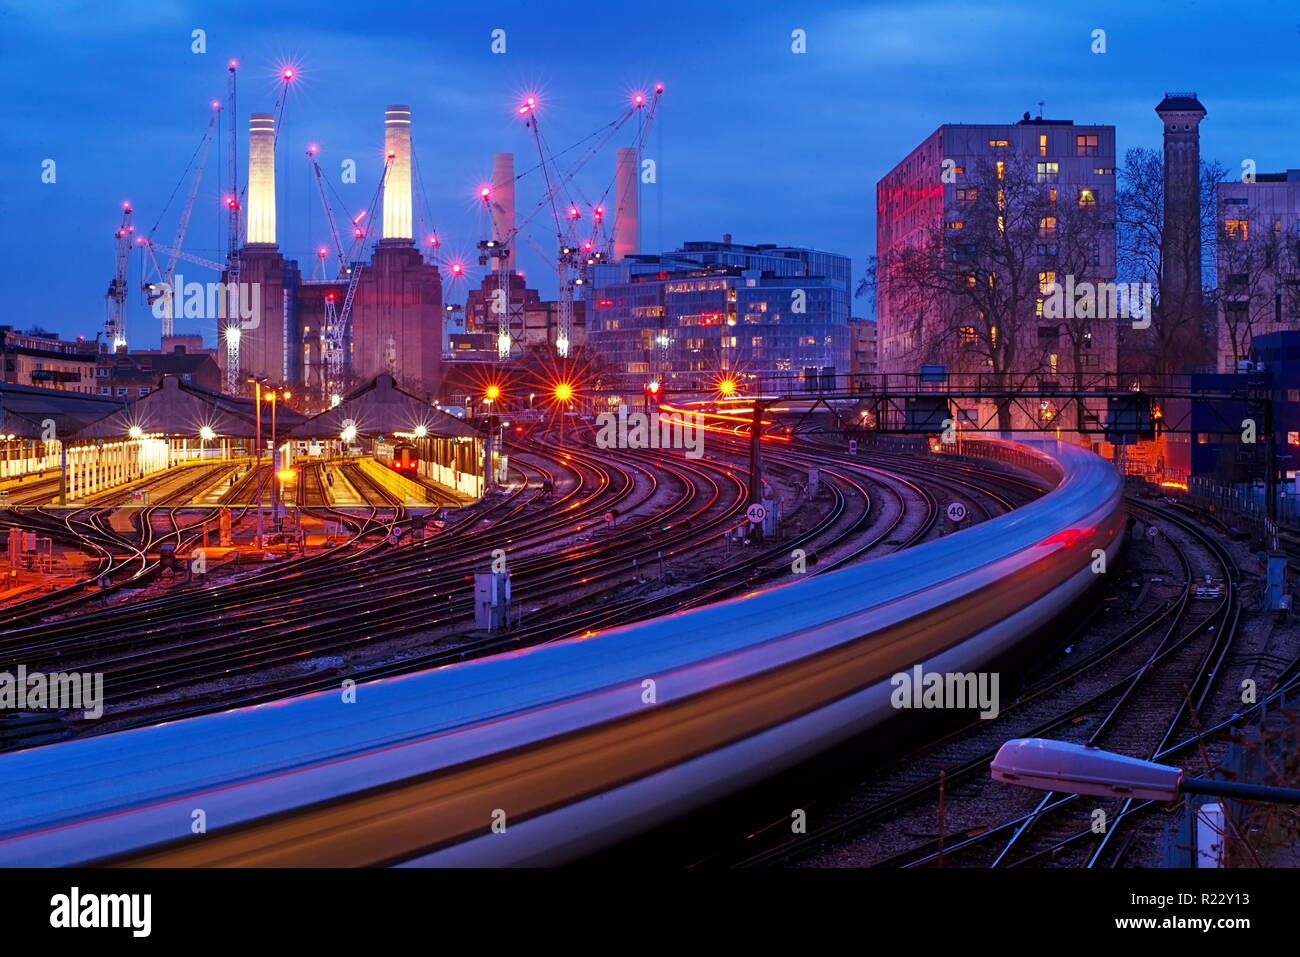 London battersea power station rail train Stock Photo